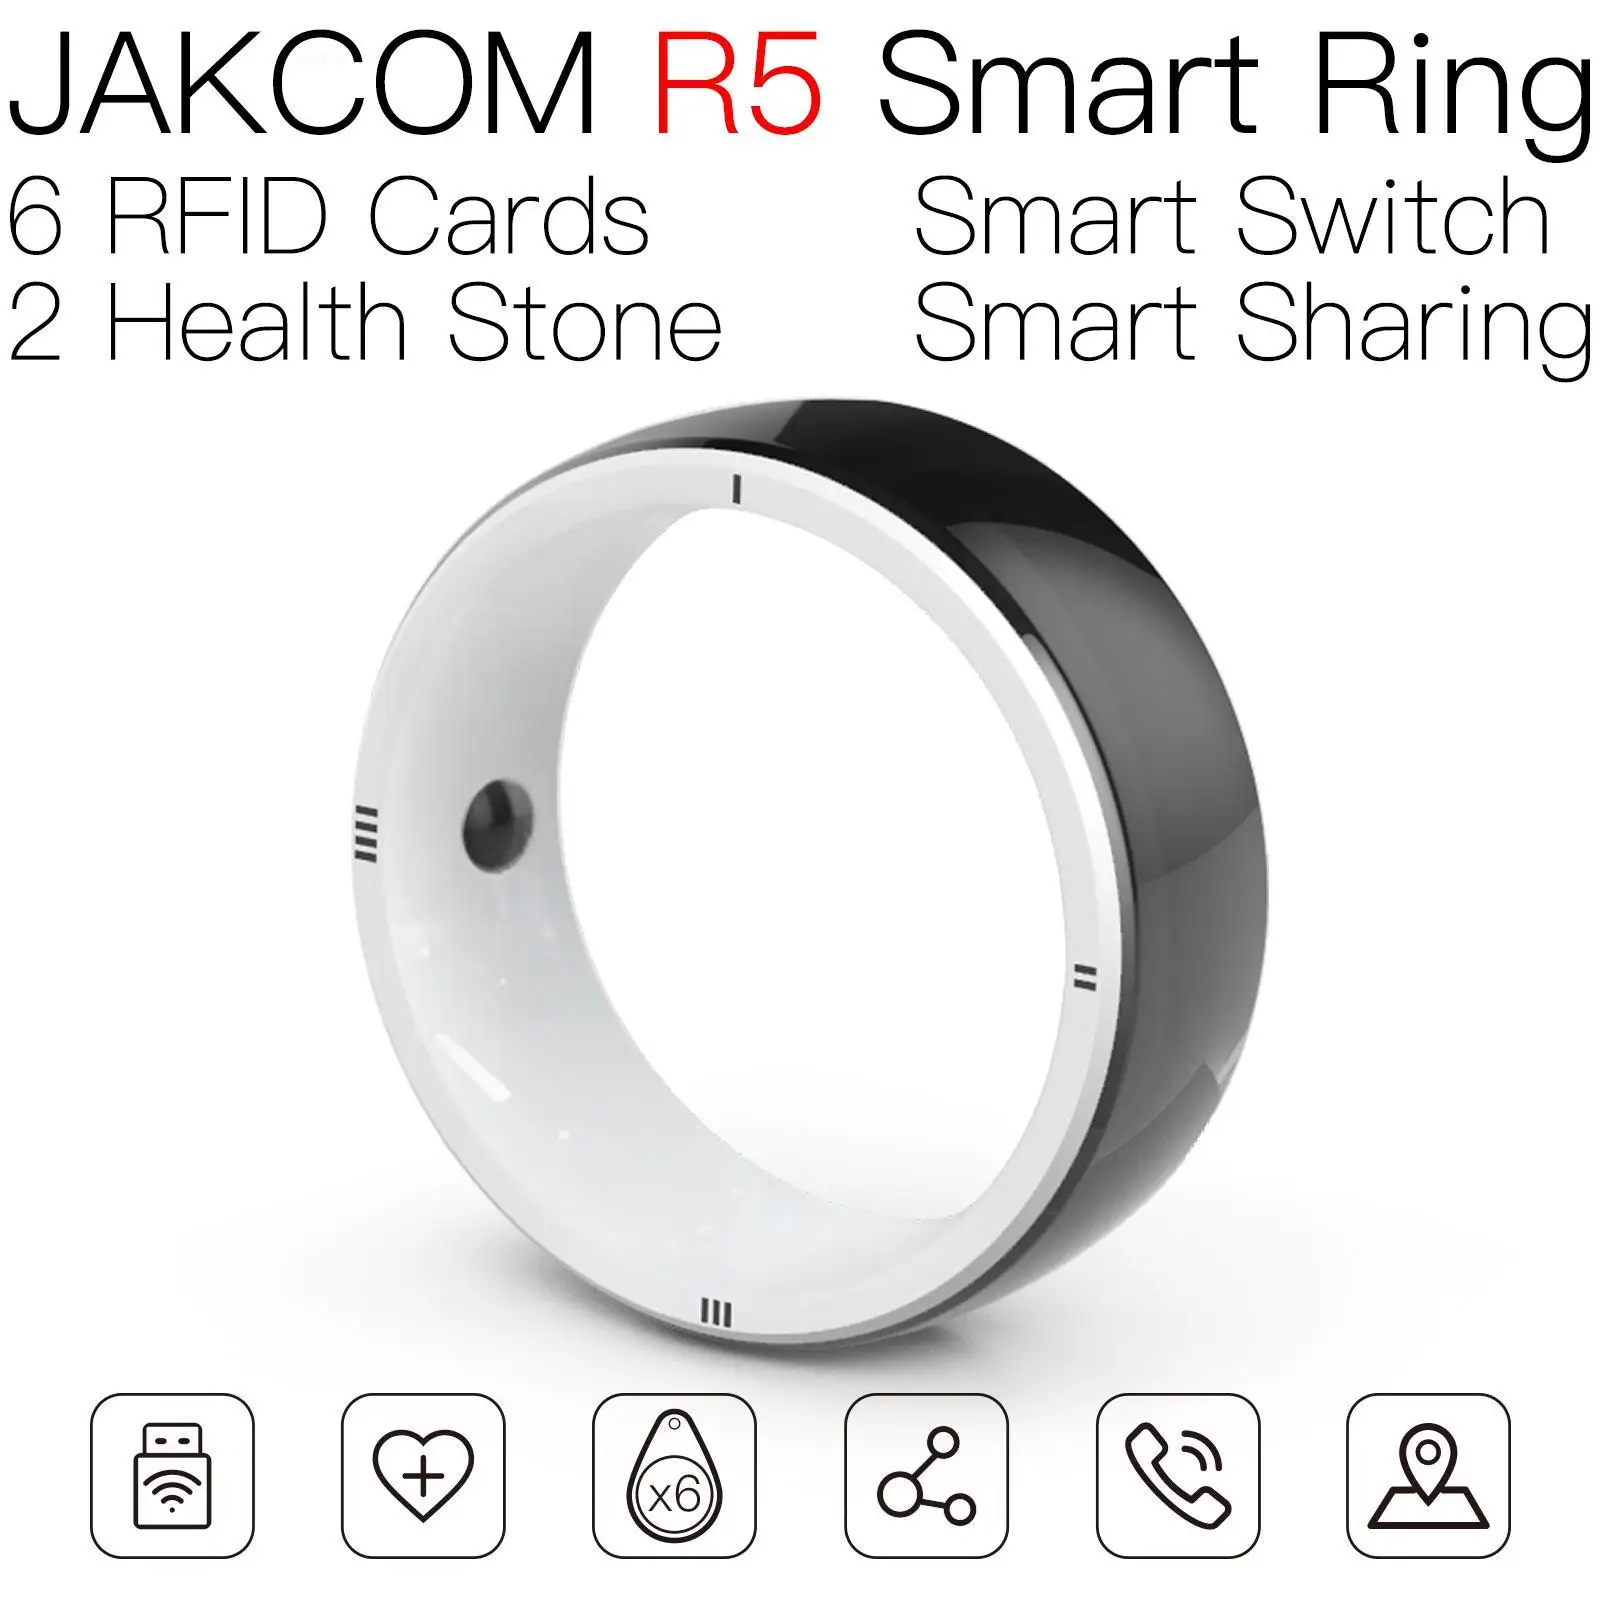 

JAKCOM R5 Smart Ring Super value than black nfc card cloner rfid tag 100 pcs read tk4100 proximity 125khz smartphone